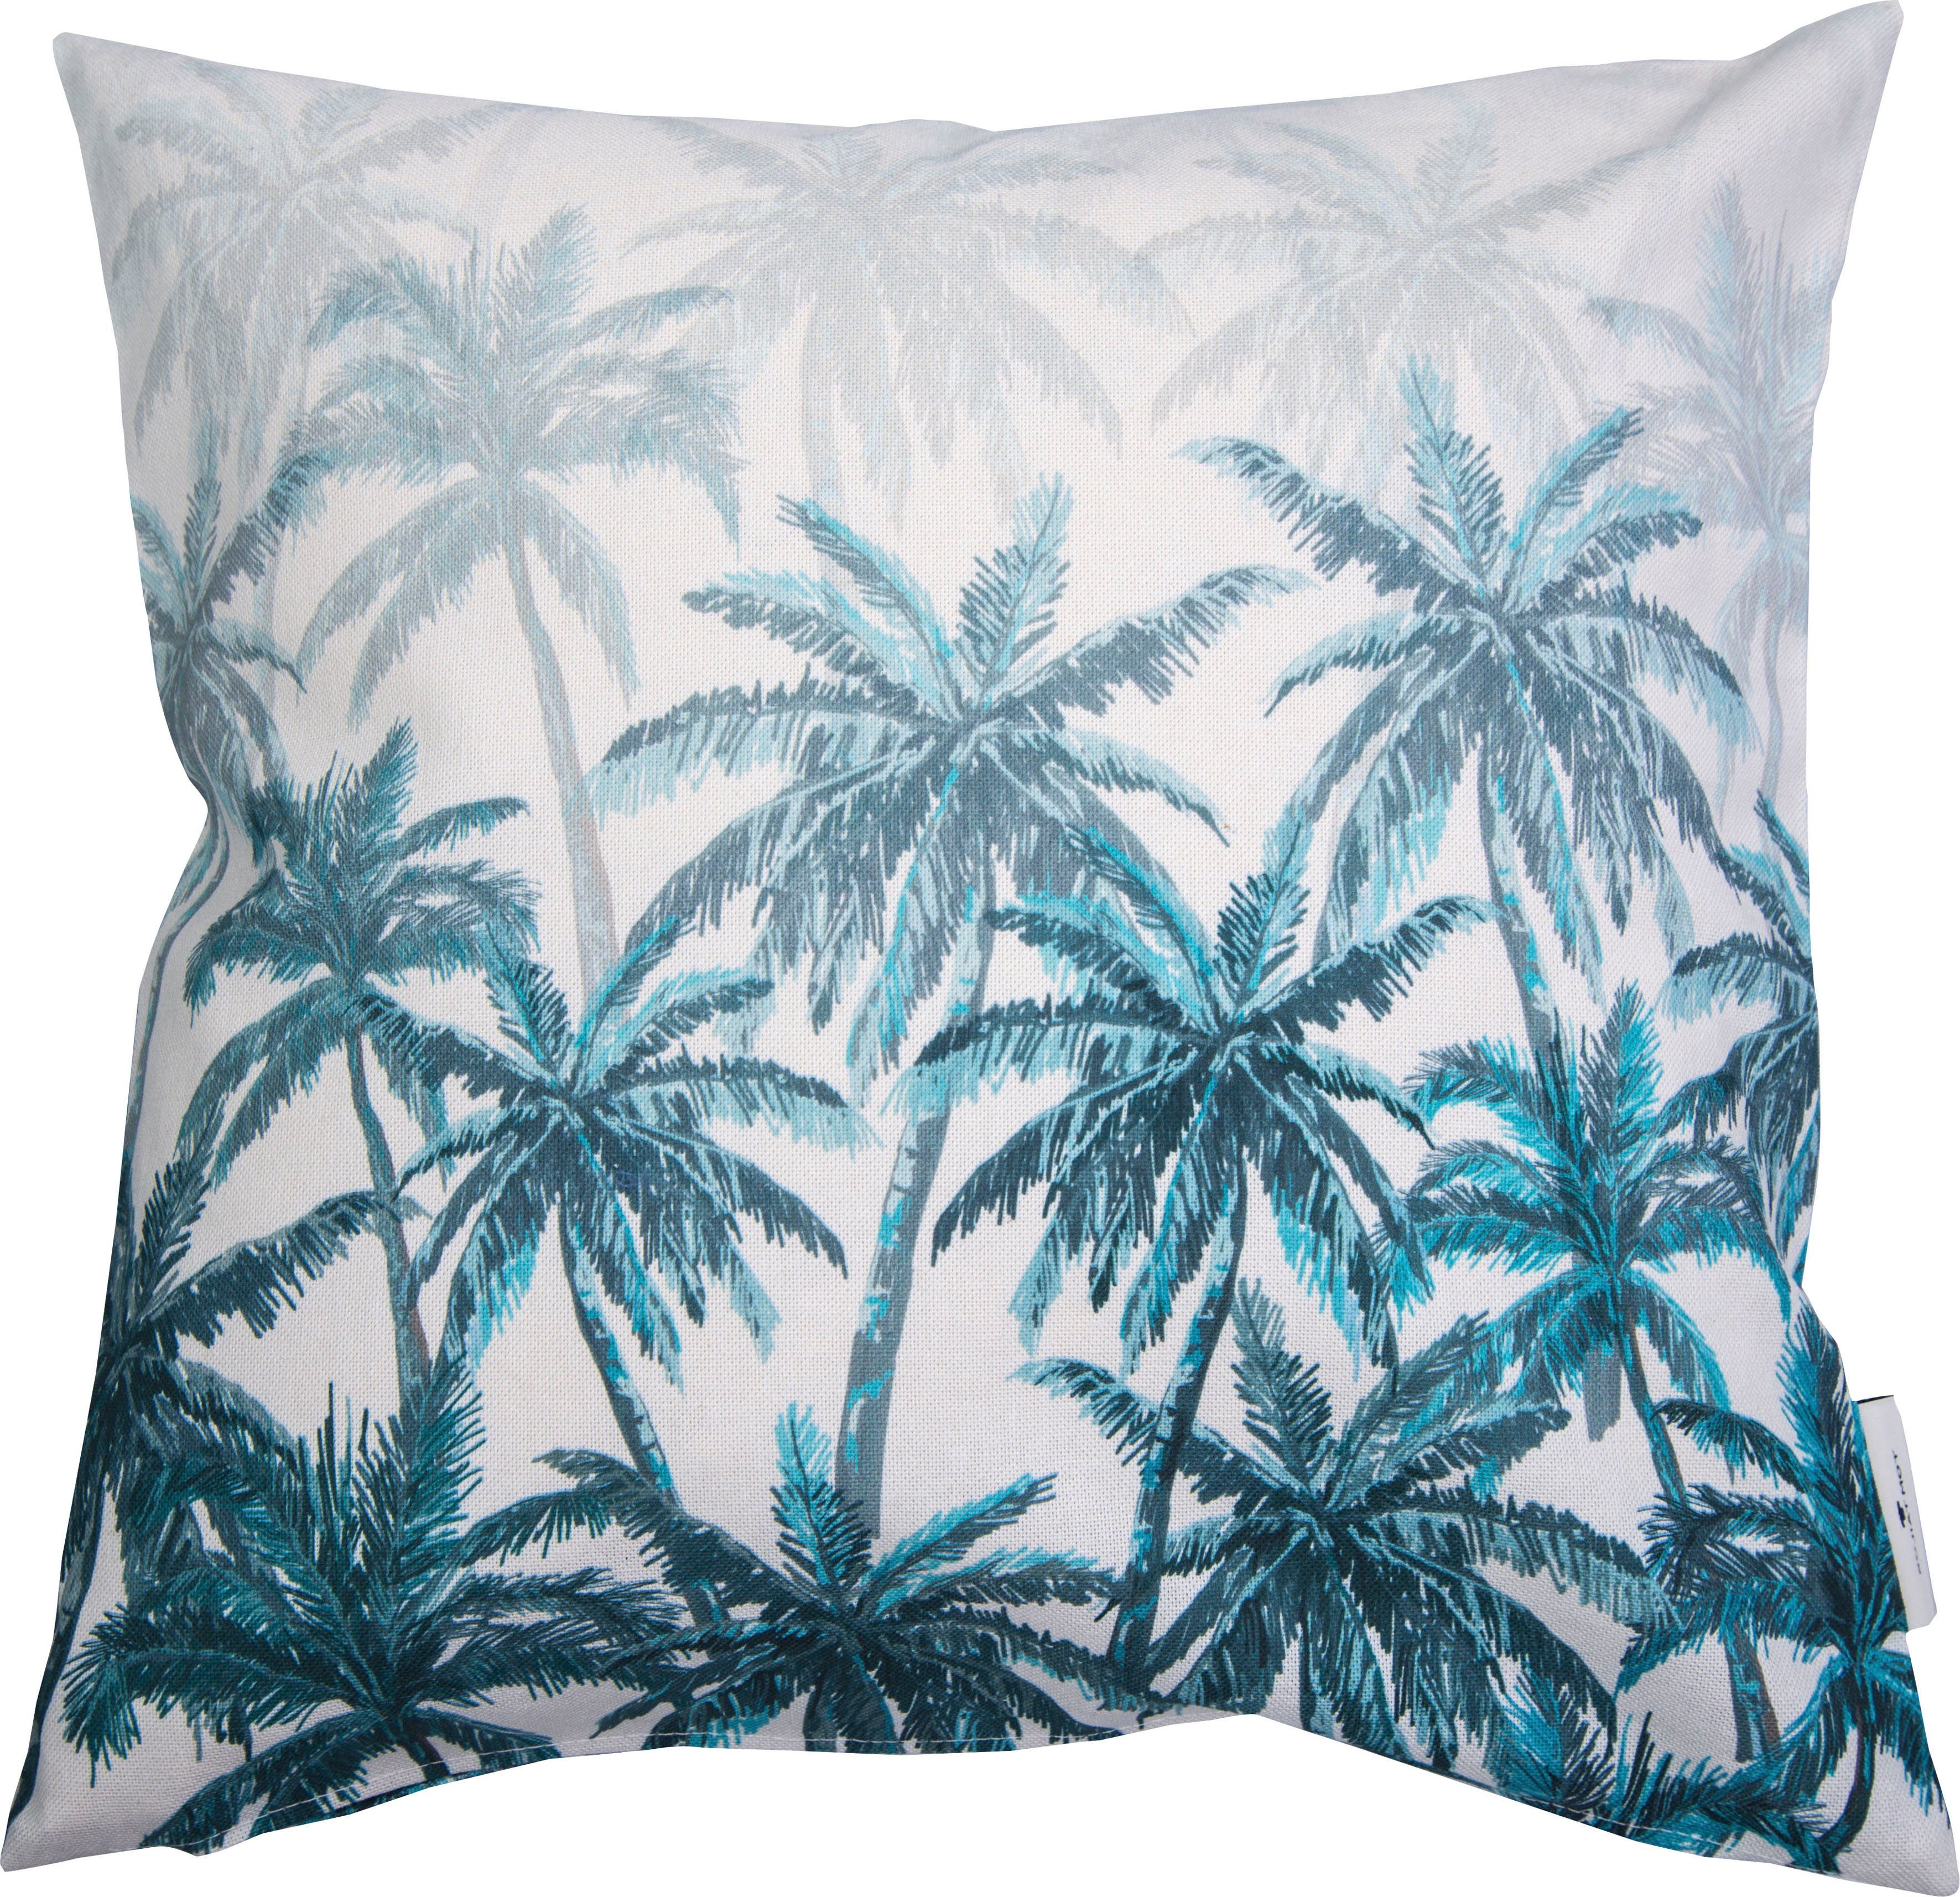 TOM TAILOR HOME Dekokissen Blurred Palm Forest, mit Palmenmotiven, Kissenhülle ohne Füllung, 1 Stück | Dekokissen